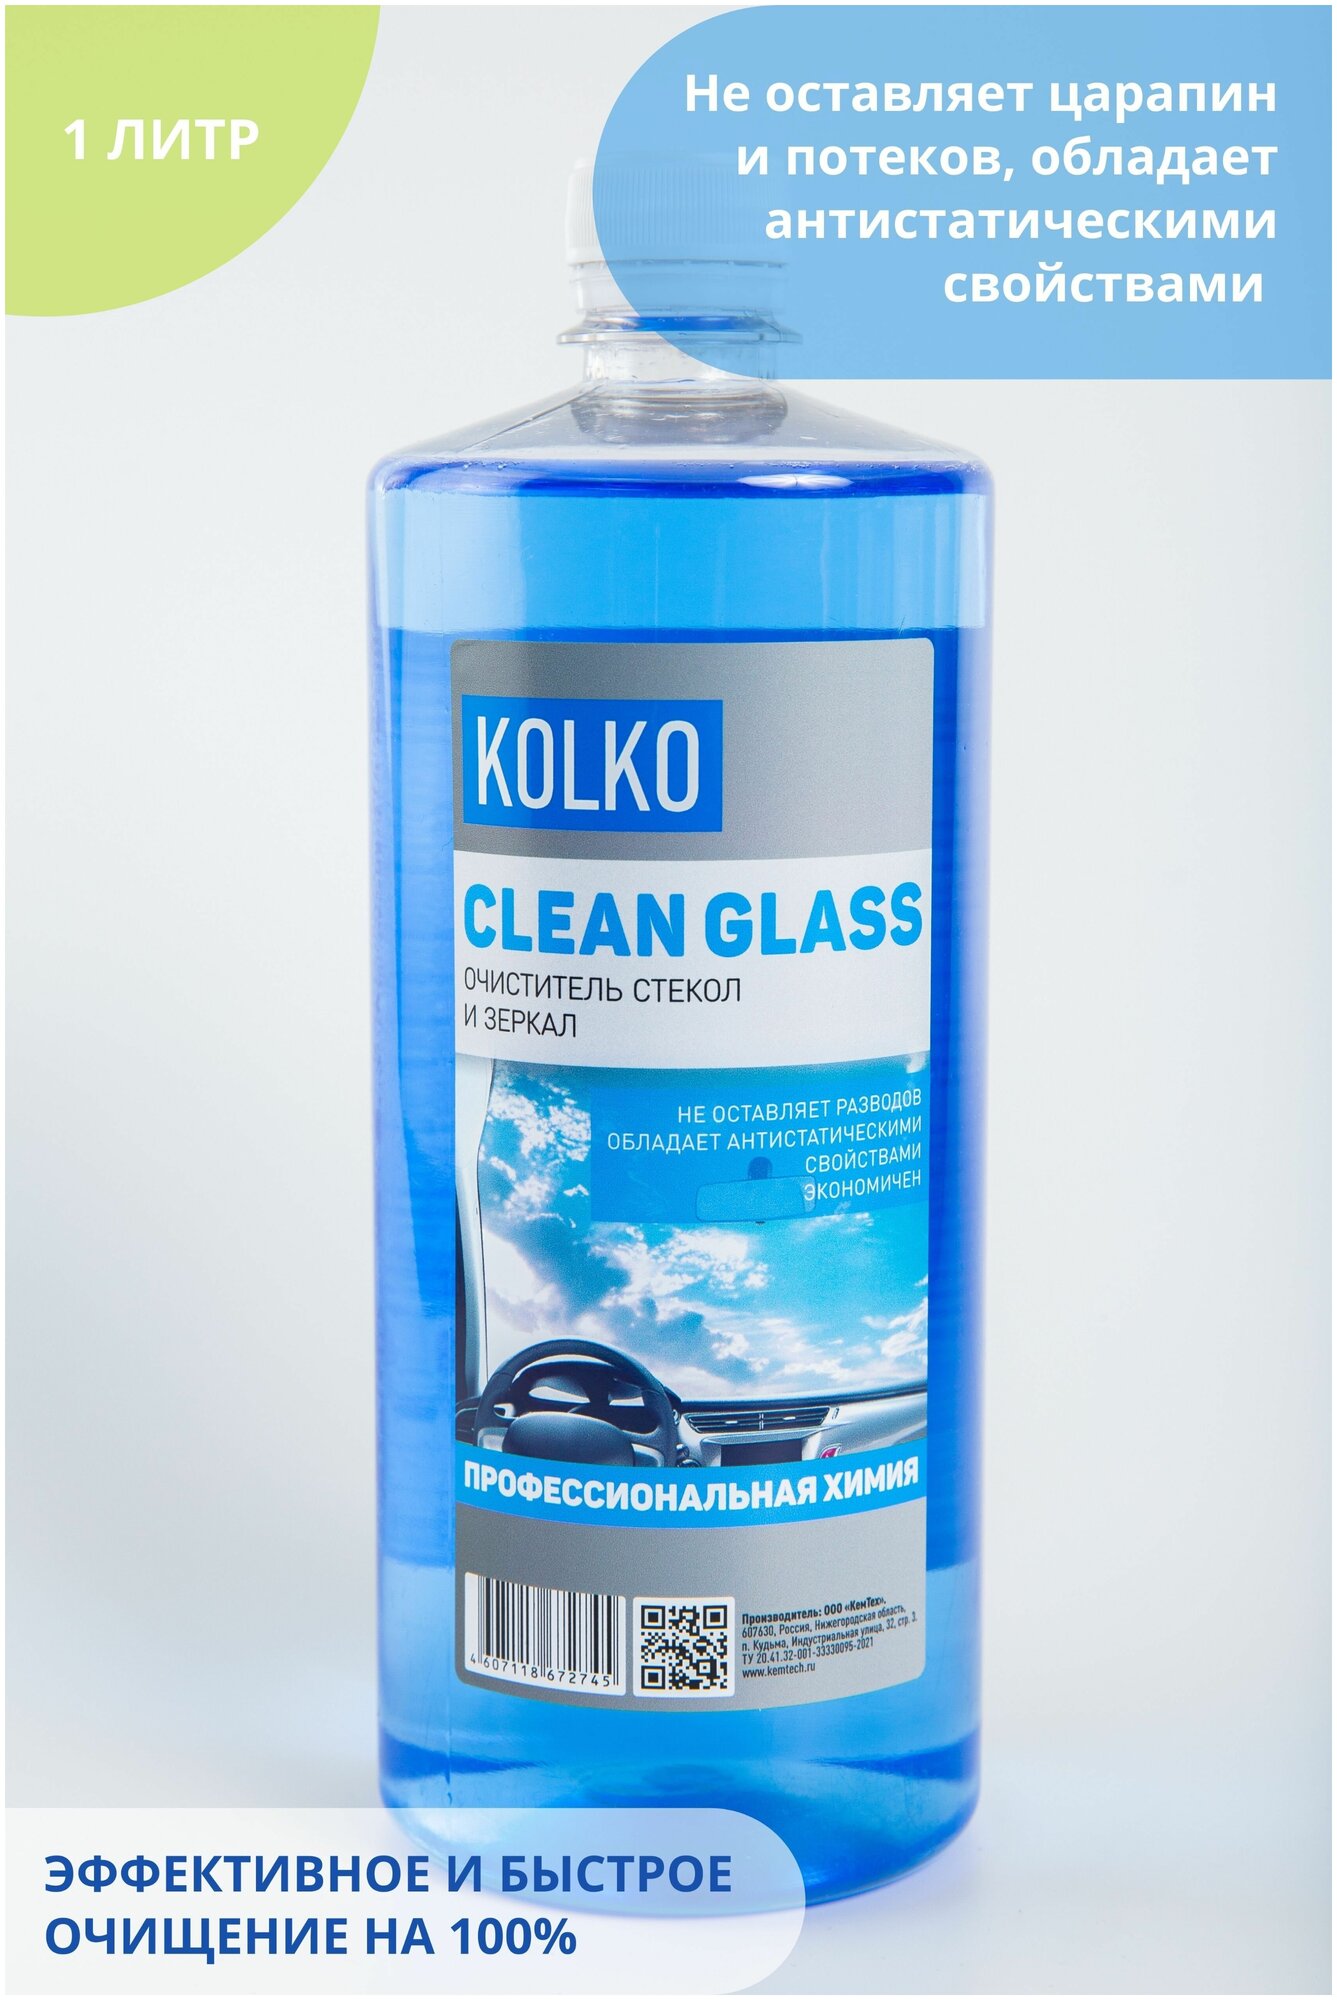 Очиститель стекол и зеркал автомобиля Kolko Clean Glass средство для чистки стекол хрома кафеля концентрат 1 литр